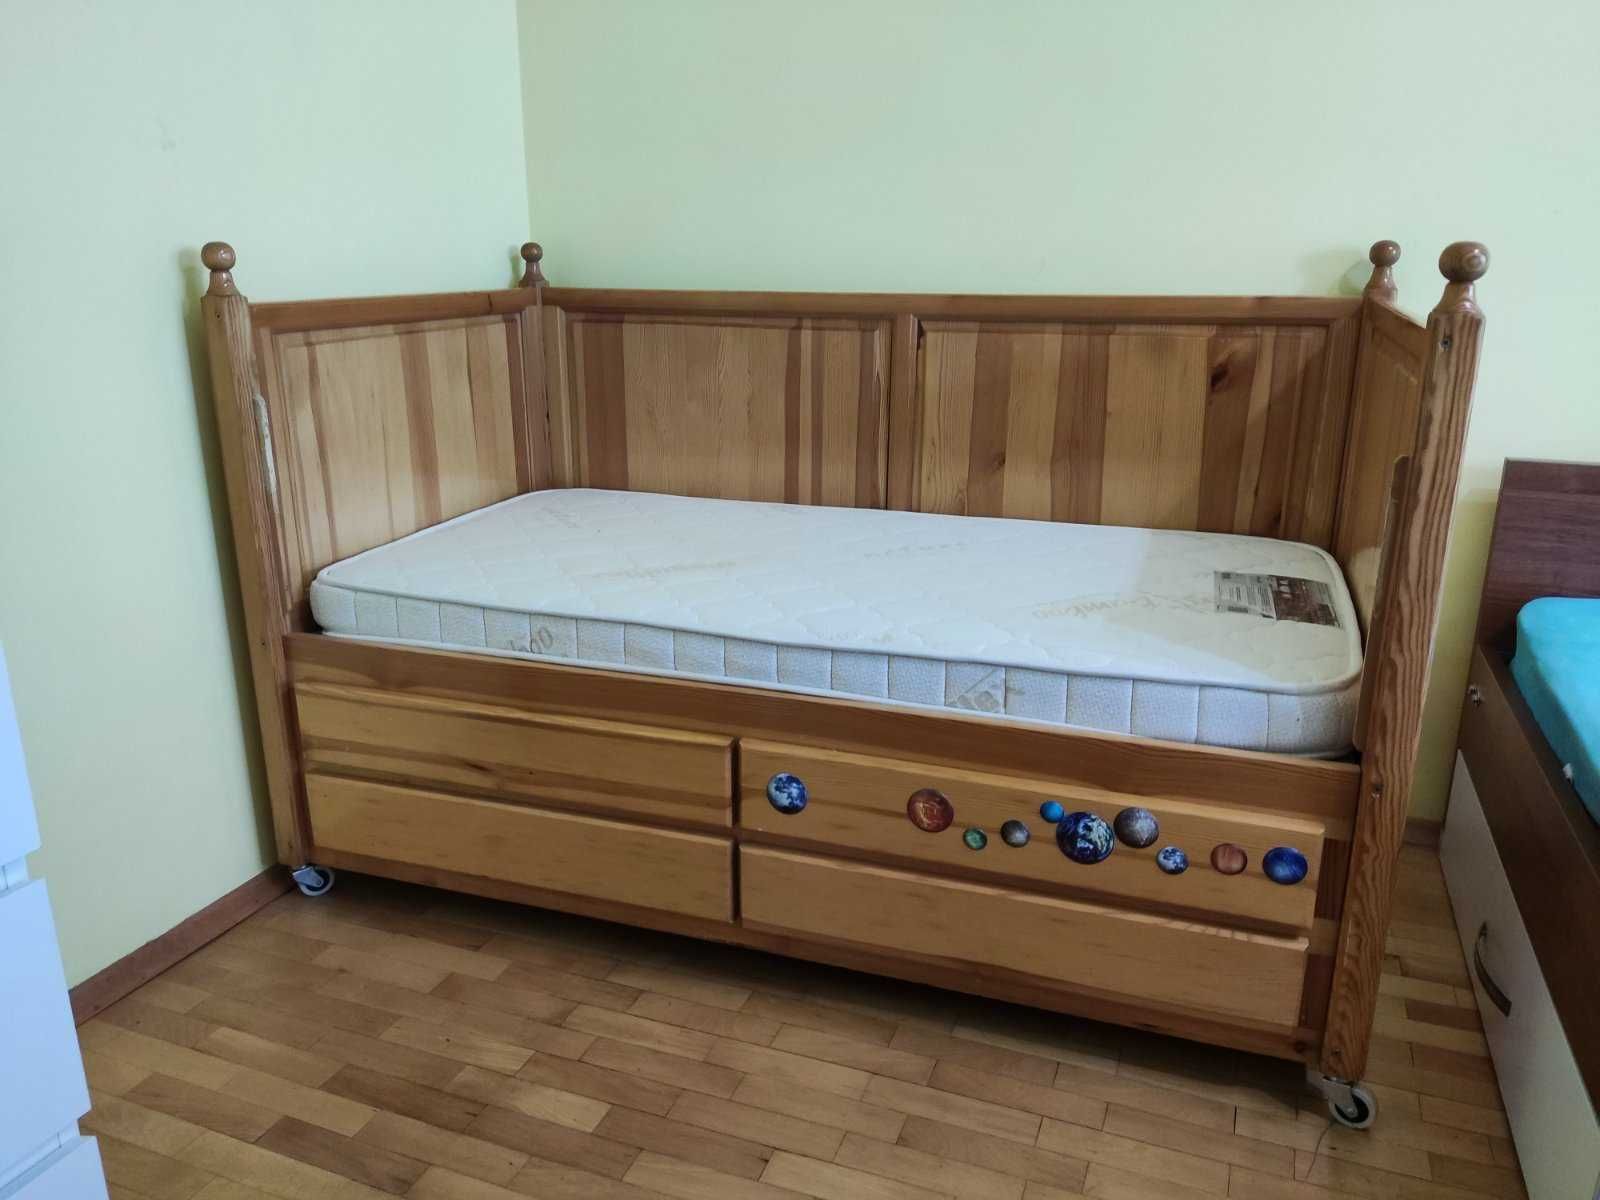 Детско дървено легло, масив, чам, кошара 140/70 + матрак magniflex